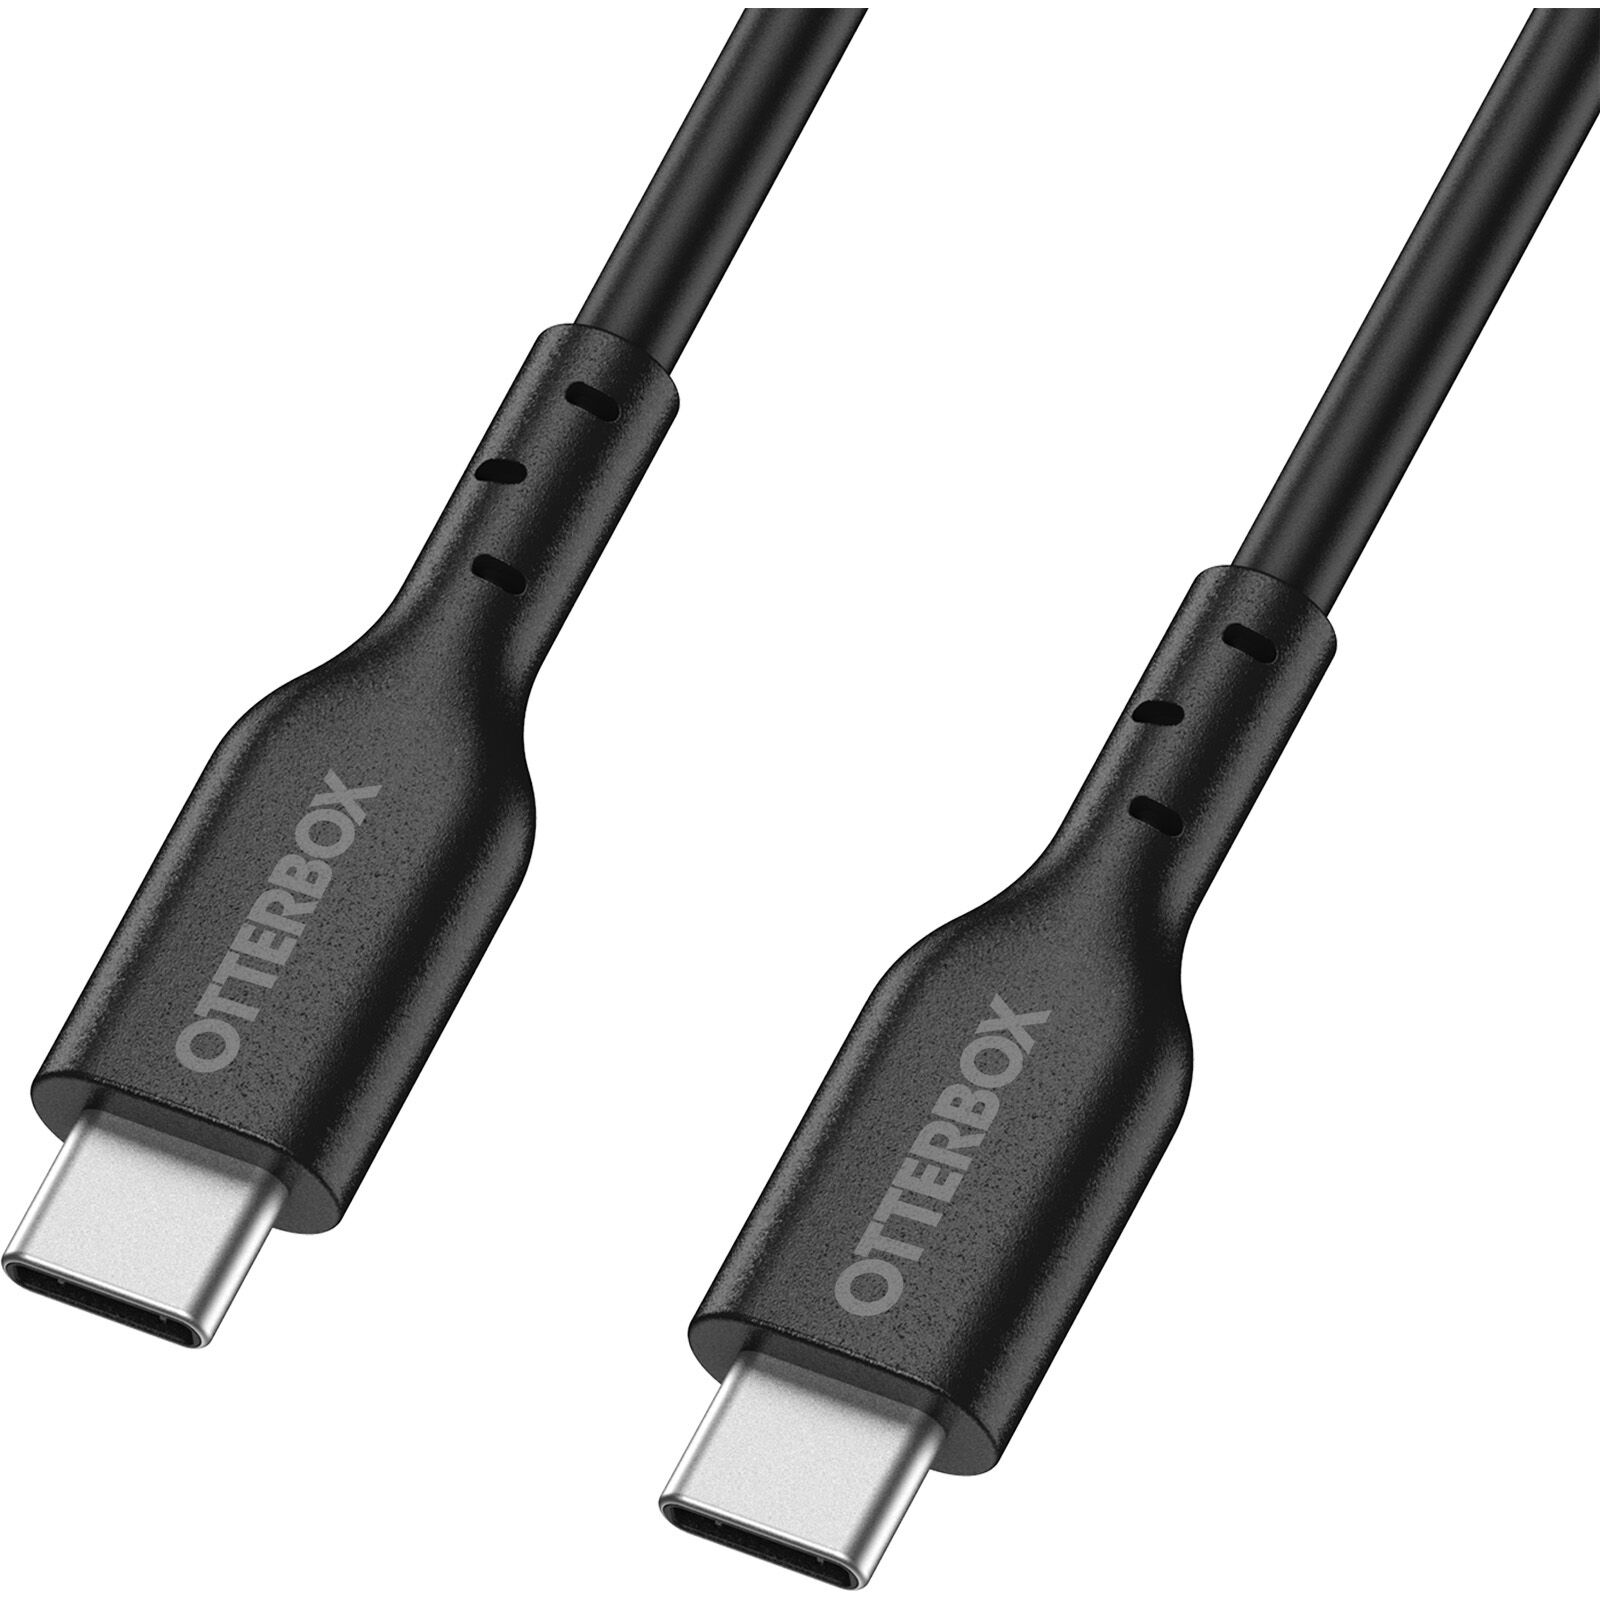 USB-C vers USB-C Câble 2 mètres Standard Fast Charge, noir